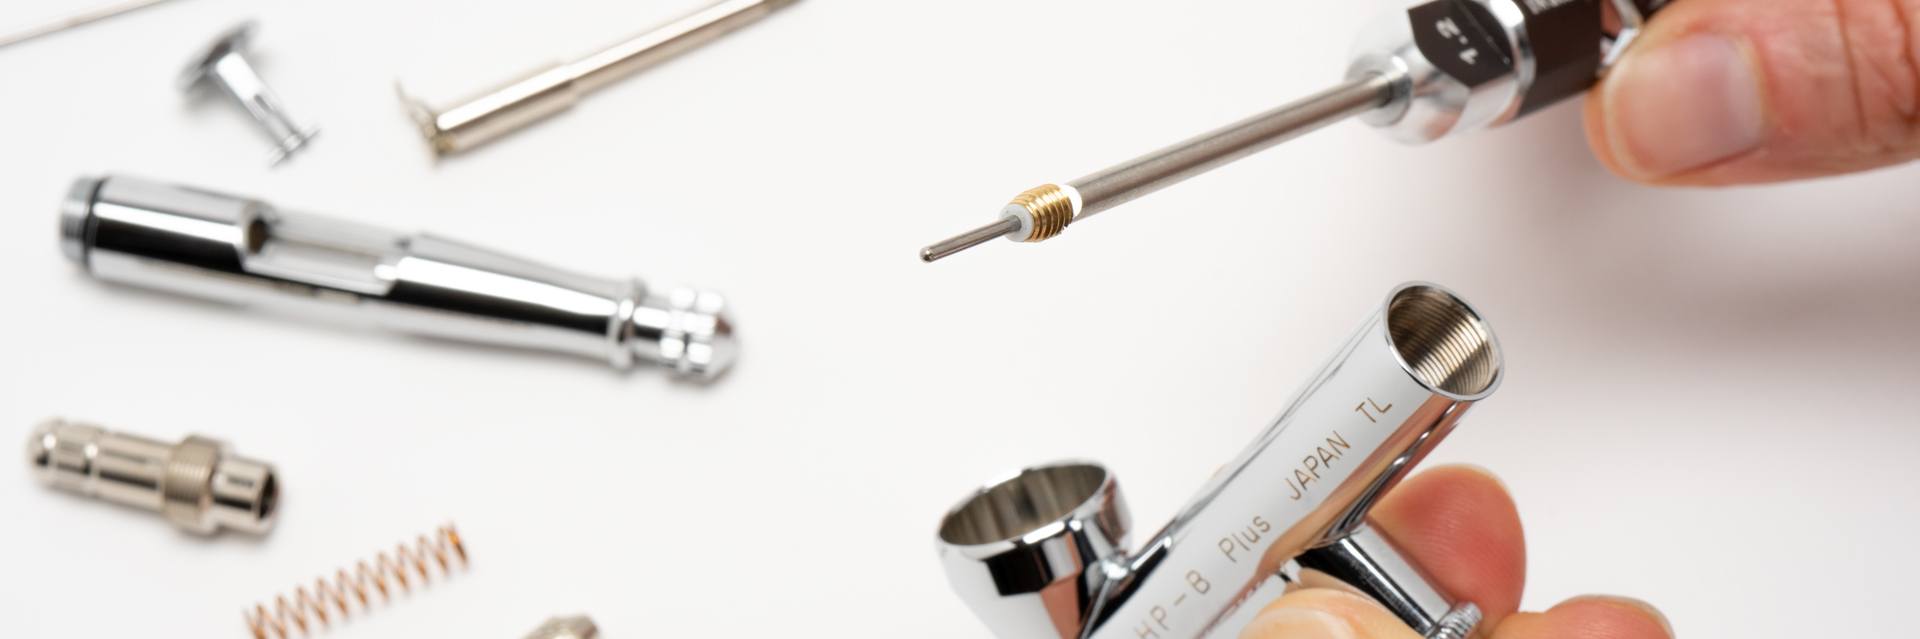 Iwata Airbrush disassembled to show packing screws